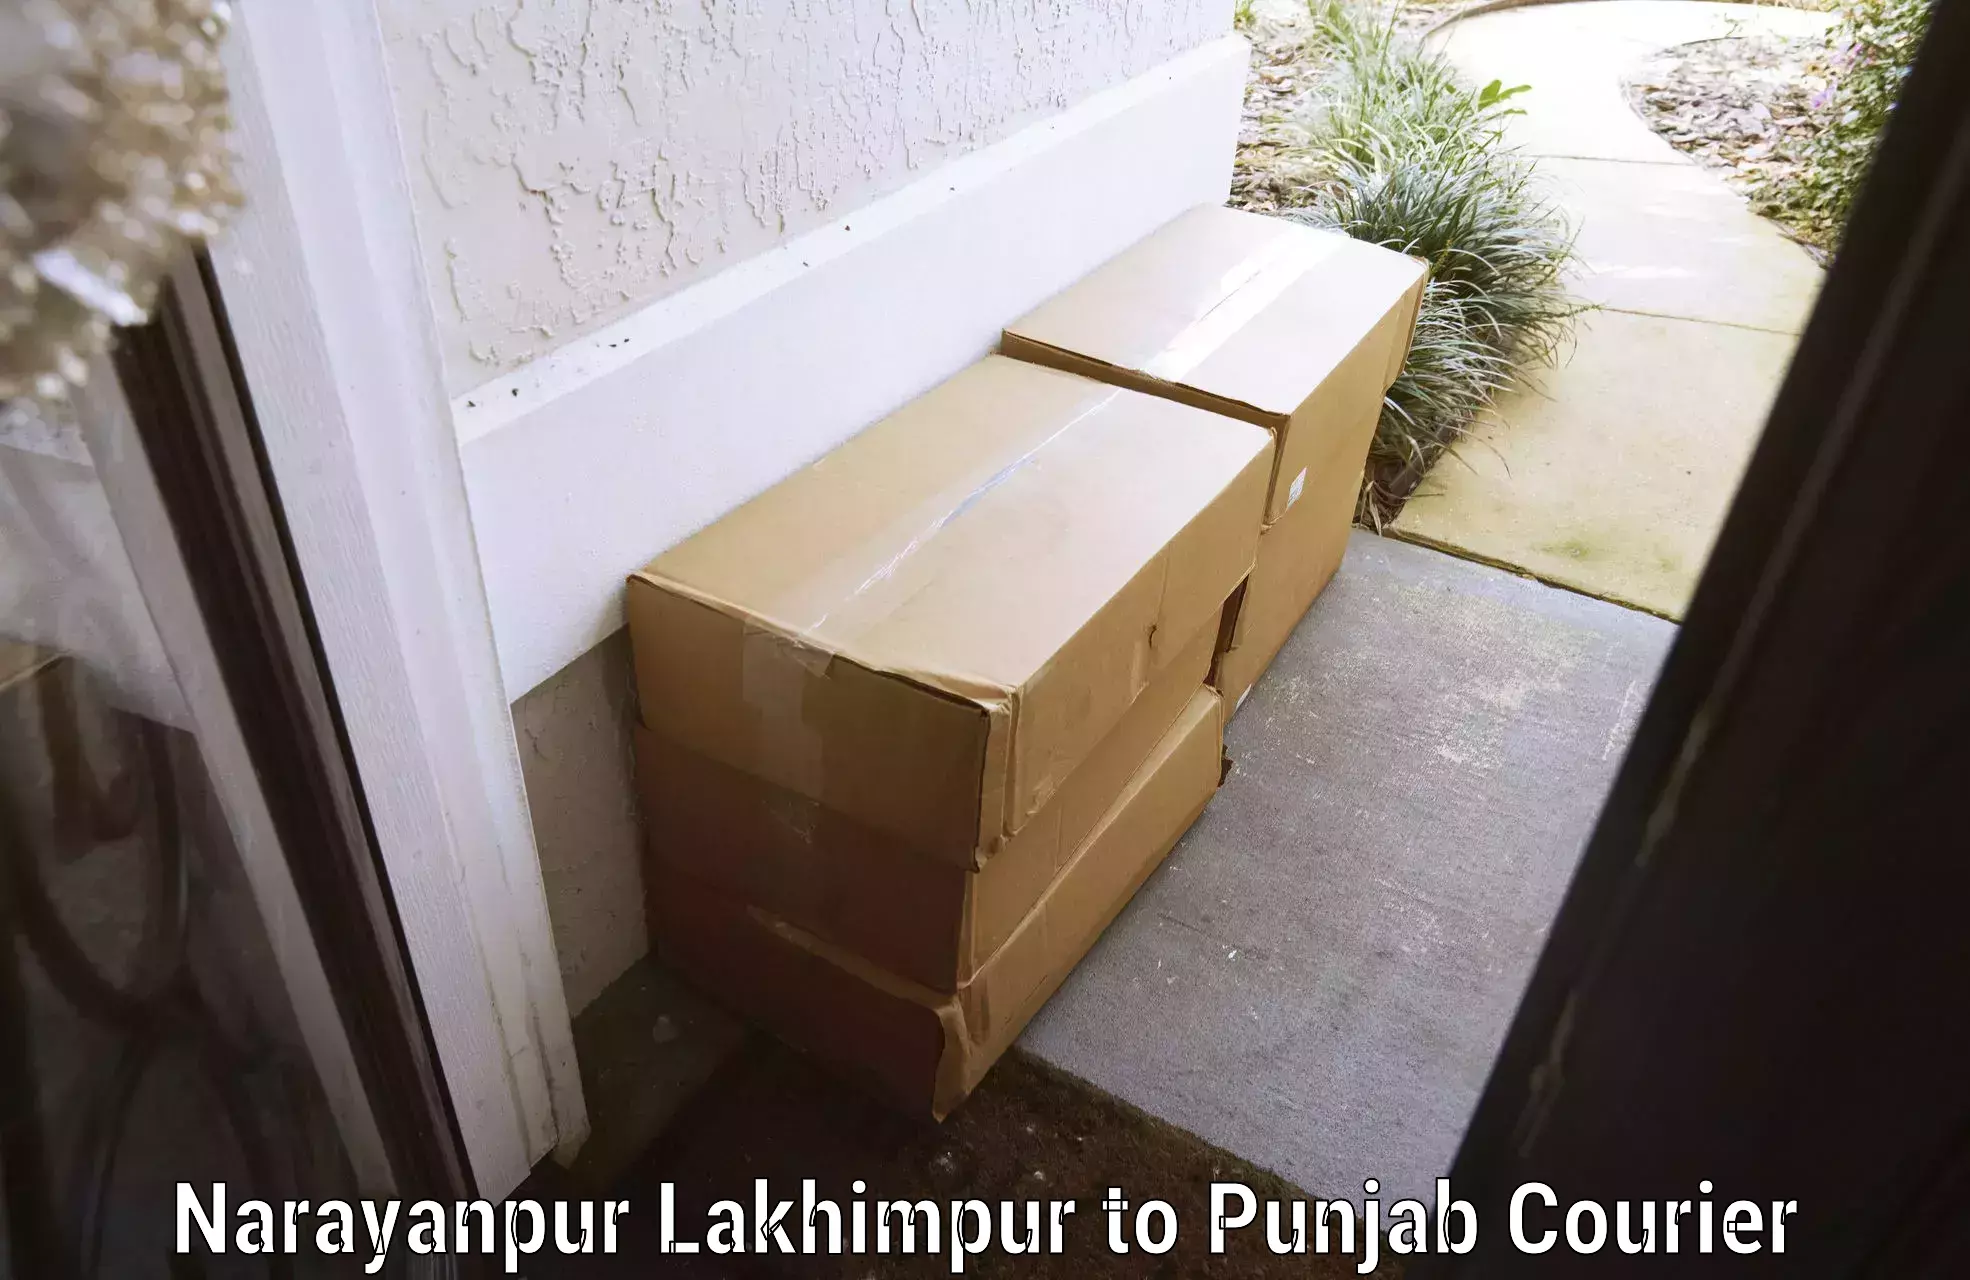 Luggage shipping specialists Narayanpur Lakhimpur to Punjab